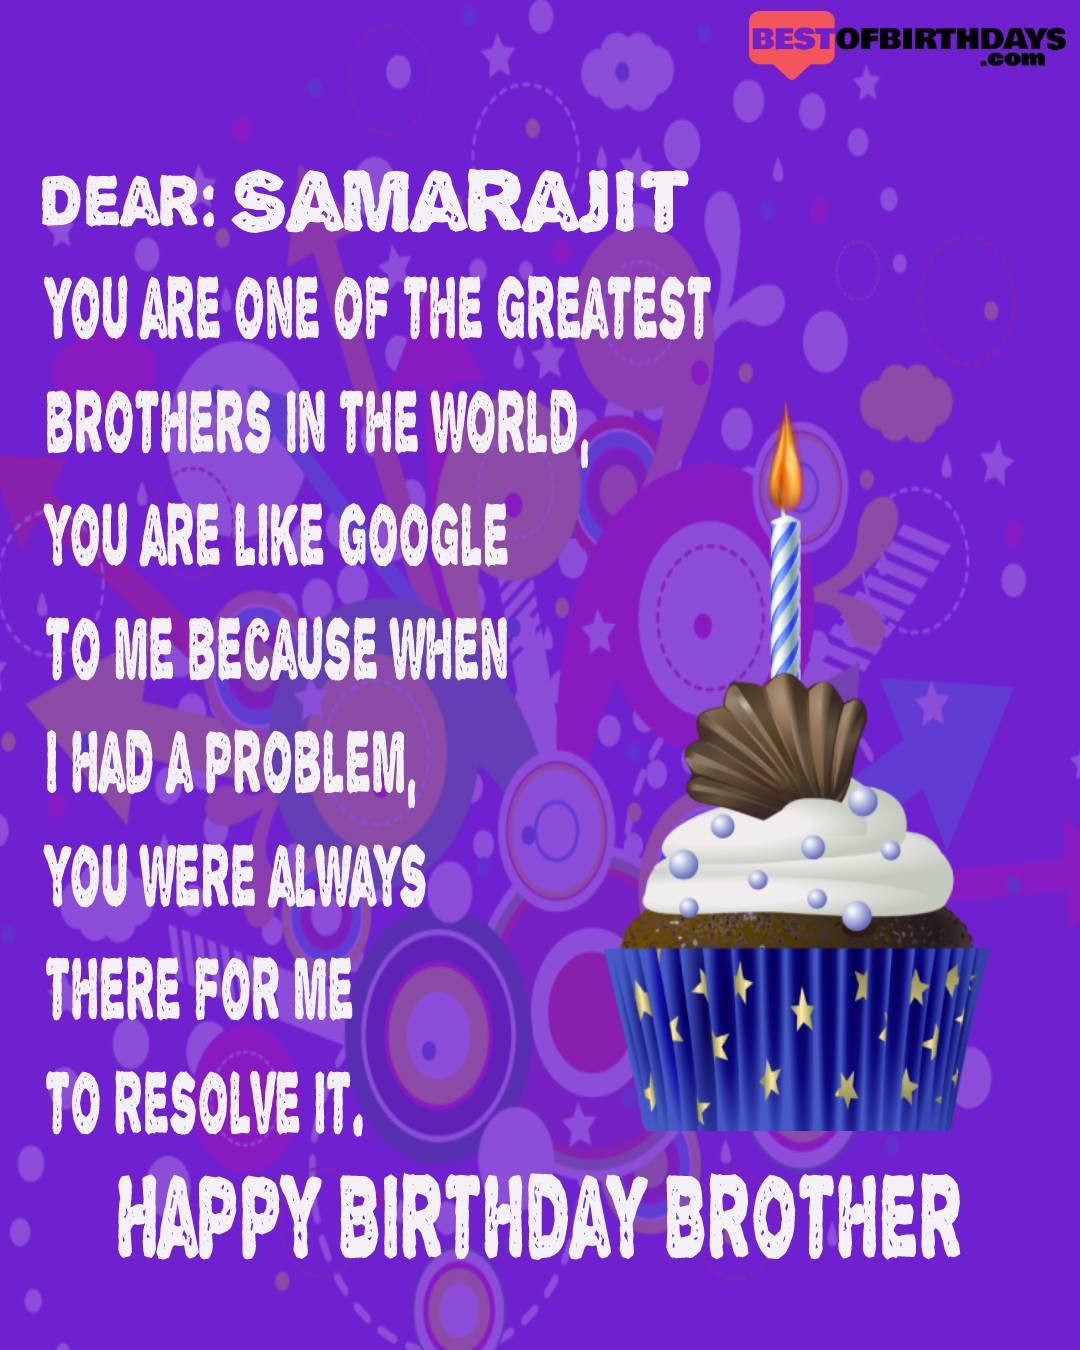 Happy birthday samarajit bhai brother bro